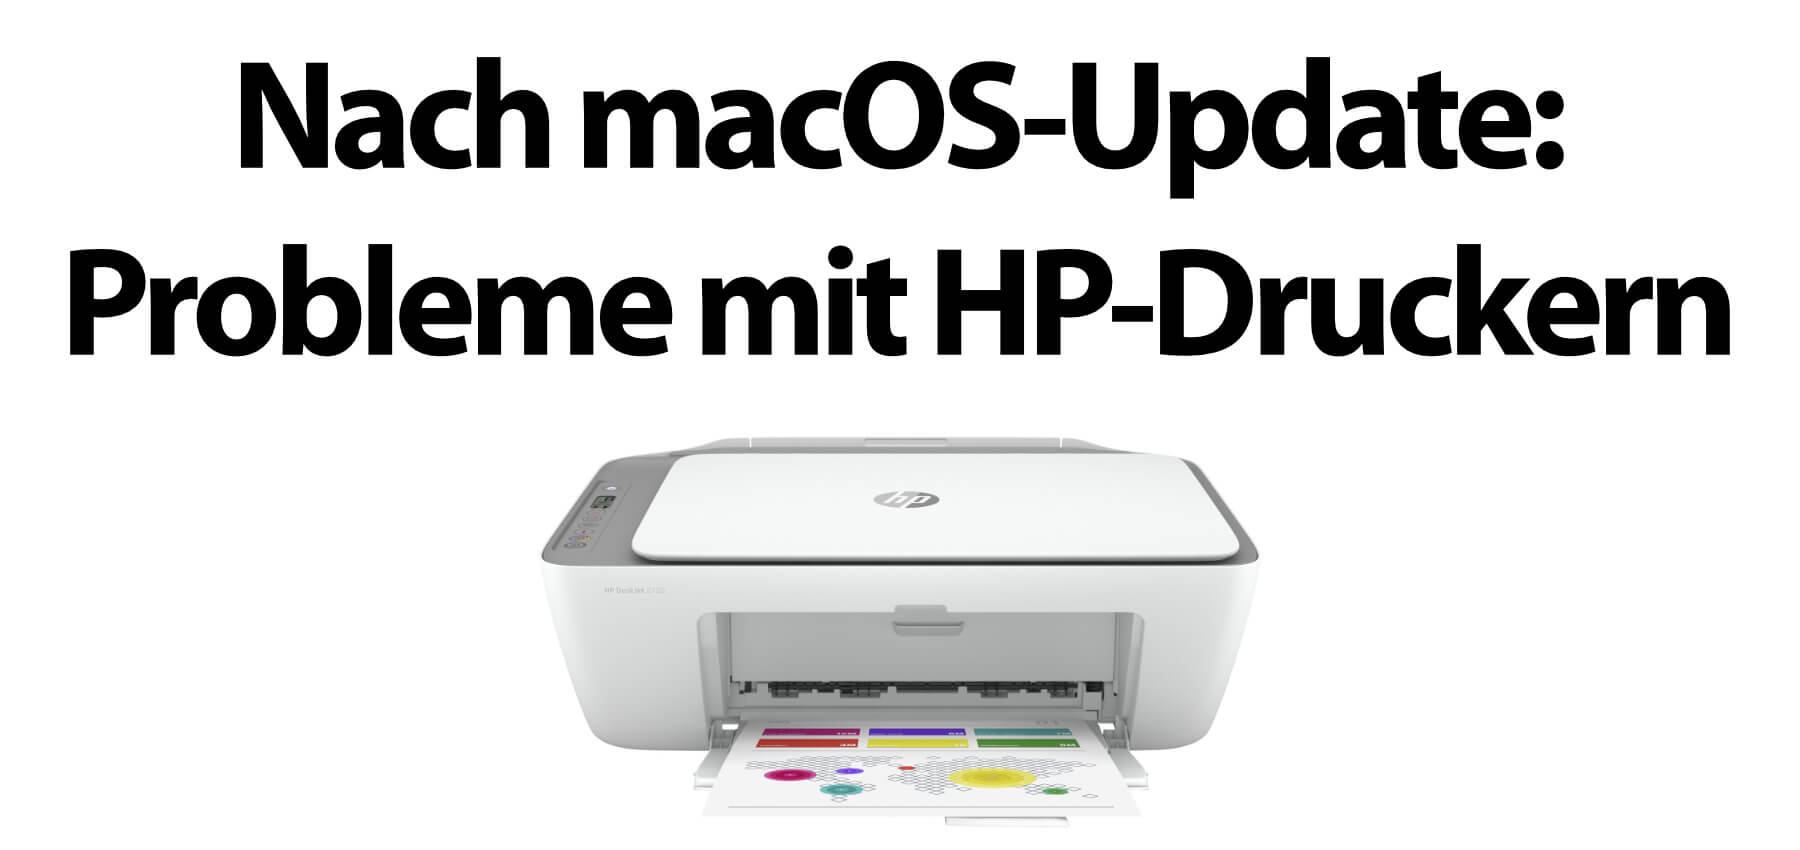 hp printer drivers for mac catalina 10.15.7